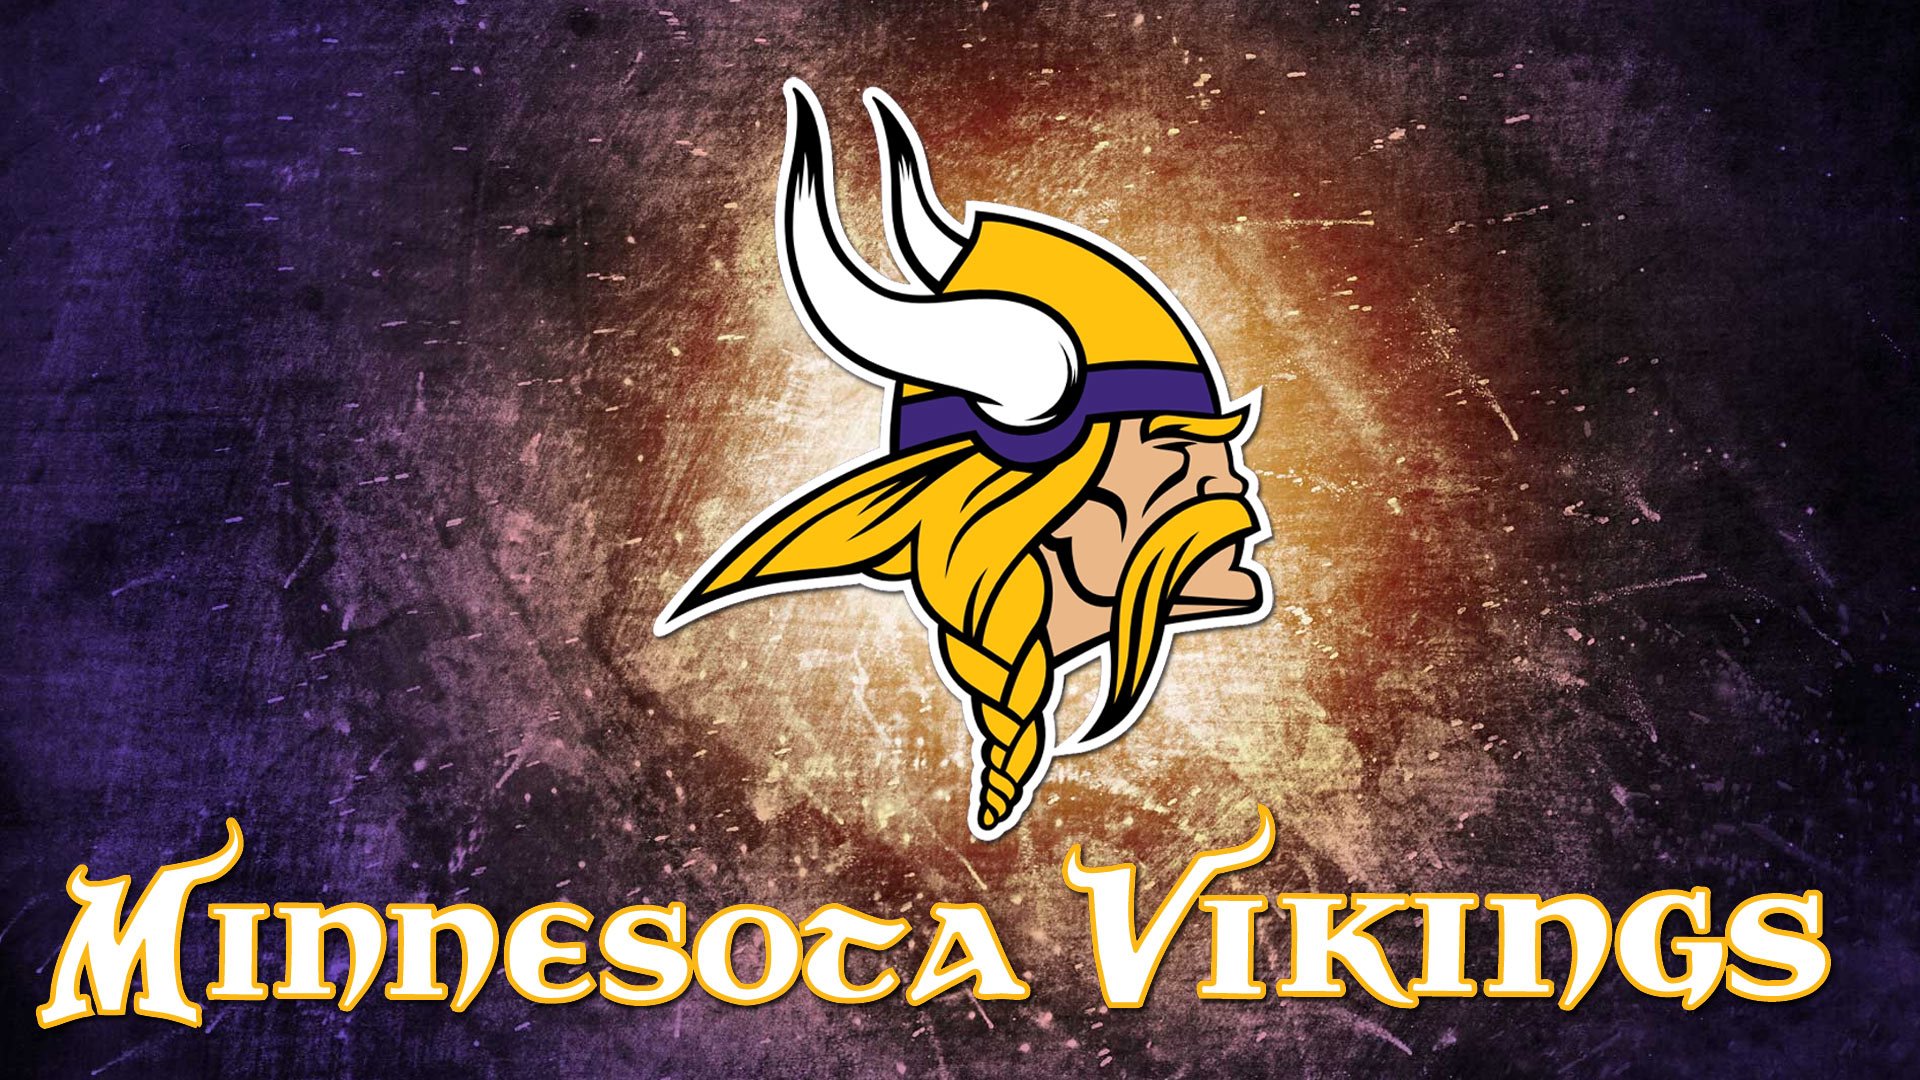 Minnesota Vikings logo wallpaper 1920x1080